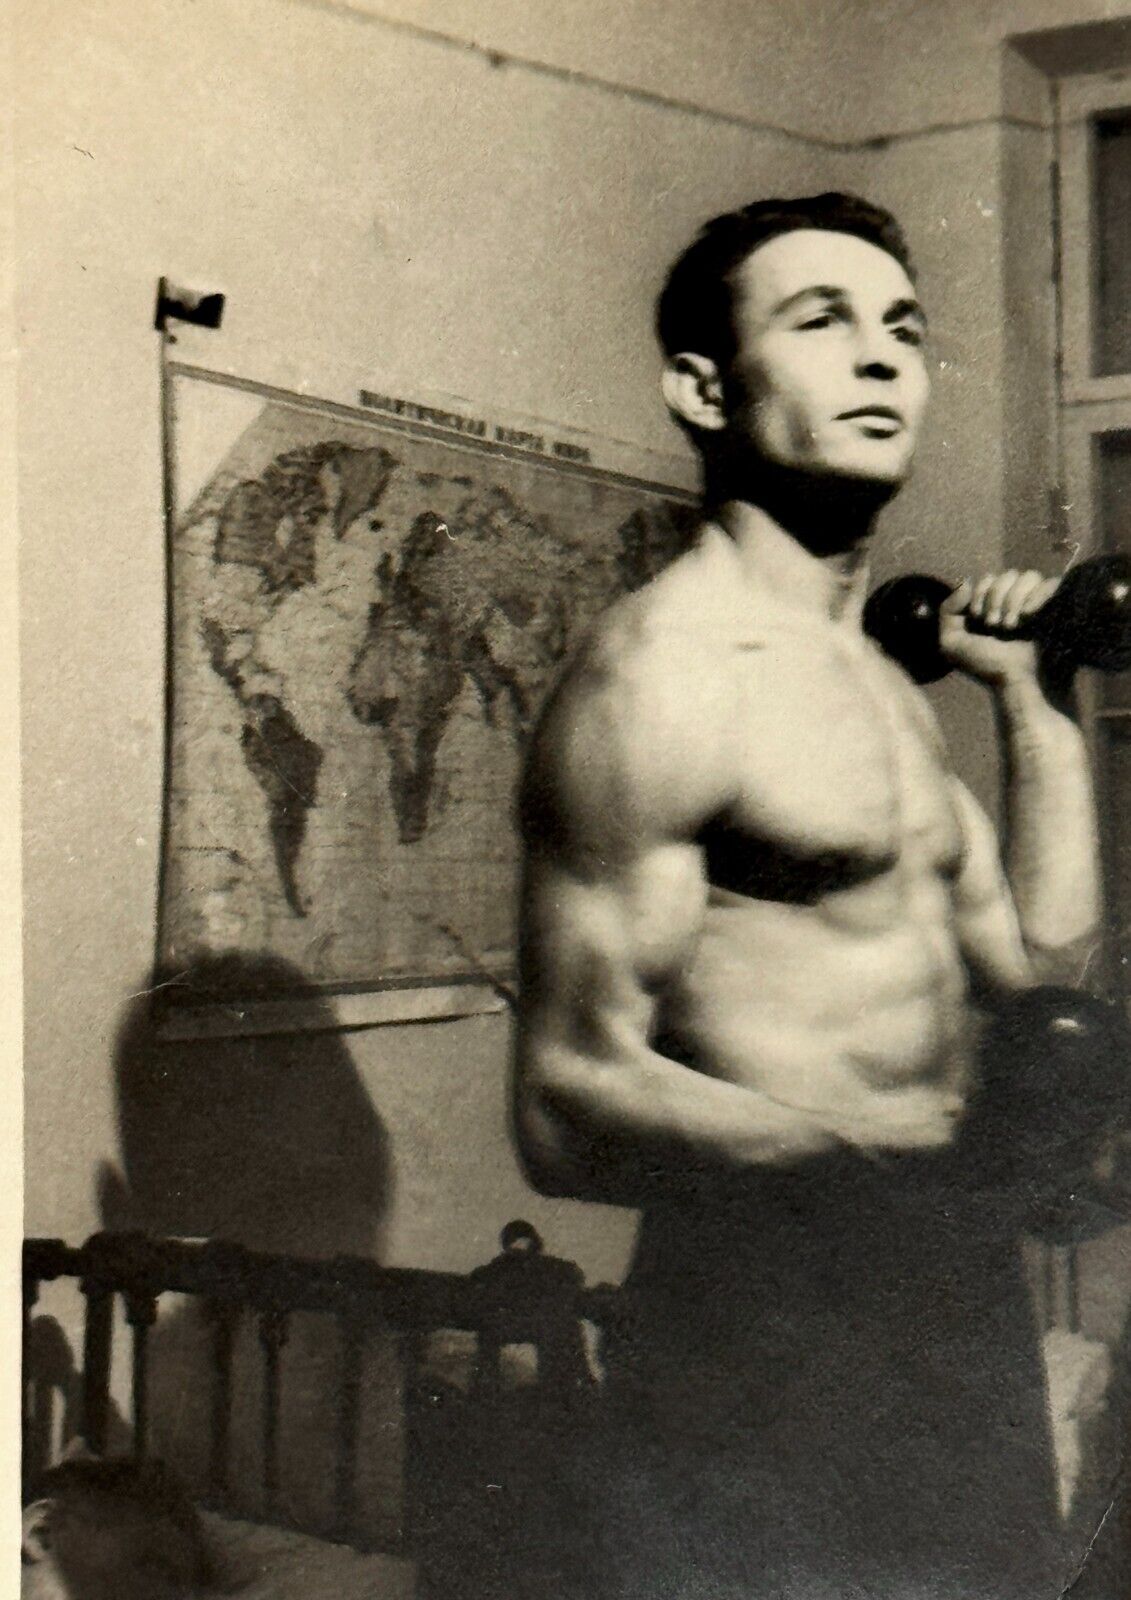 1952 Handsome Muscular Man Bodybuilder Affectionate Guy Gay int Vintage Photo